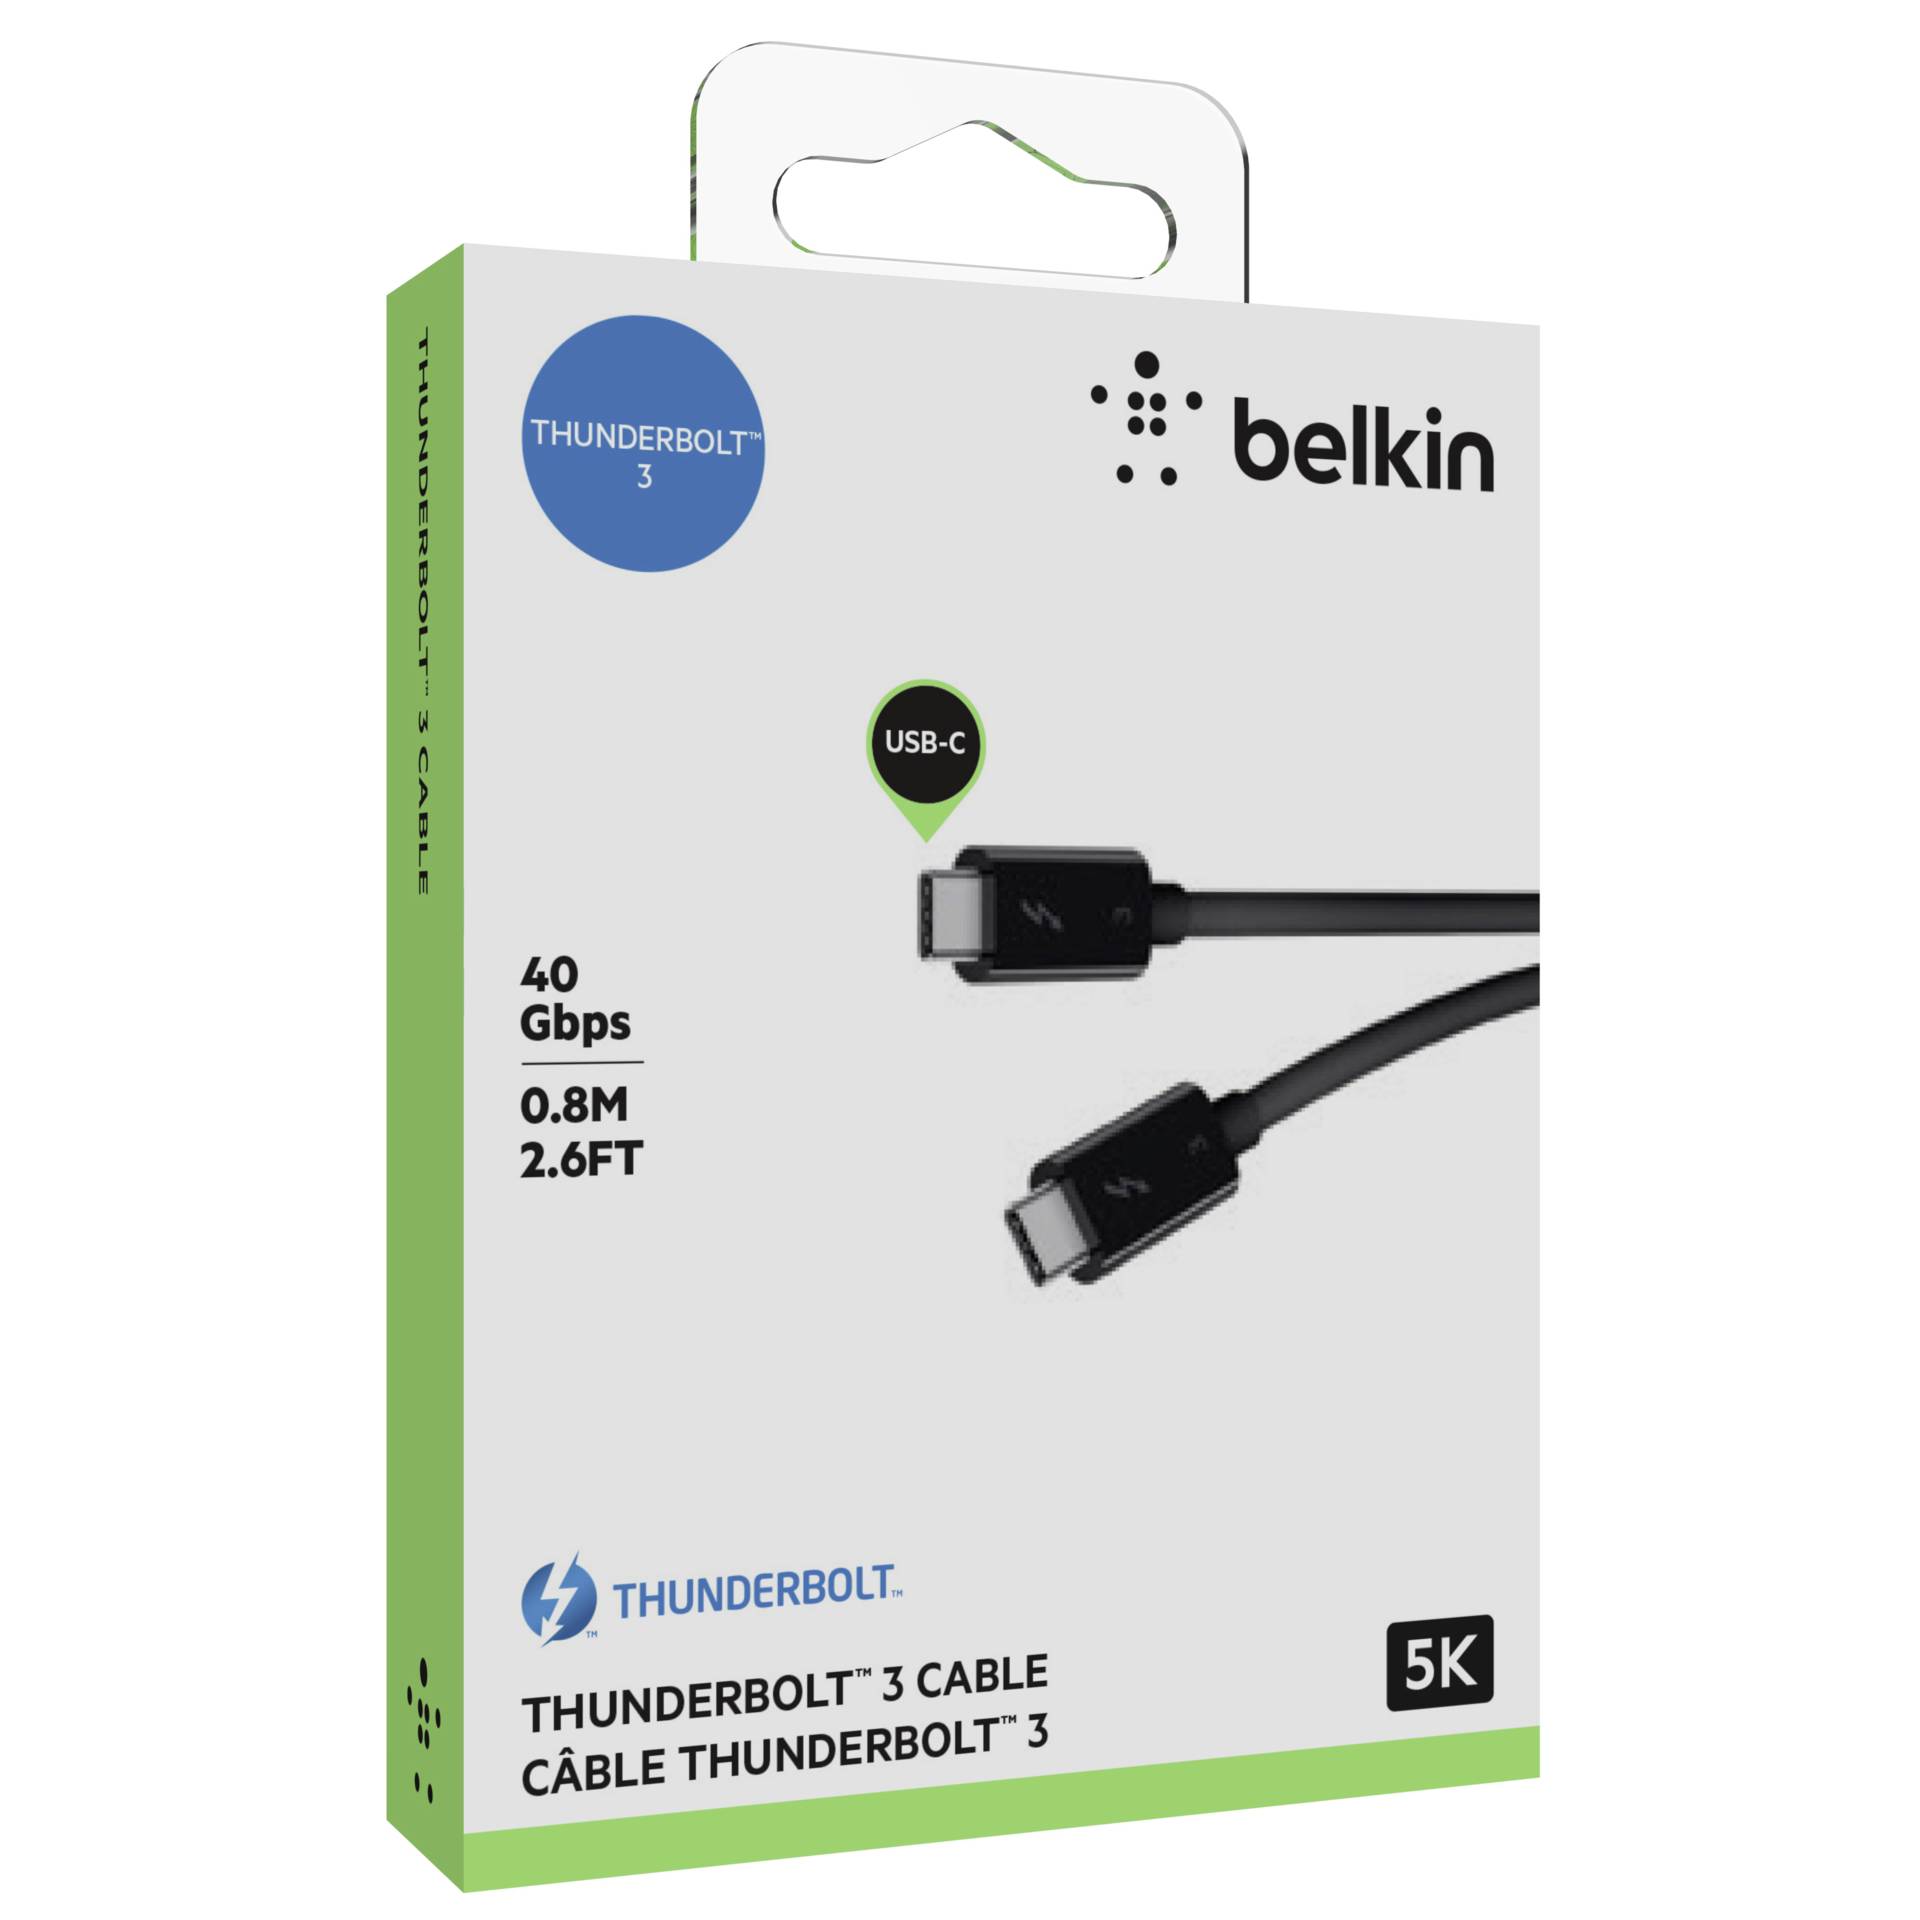 Belkin USB-C Thunderbolt 3 100W PD Cable 0.8m (Black) #F2CD084bt0.8MbK